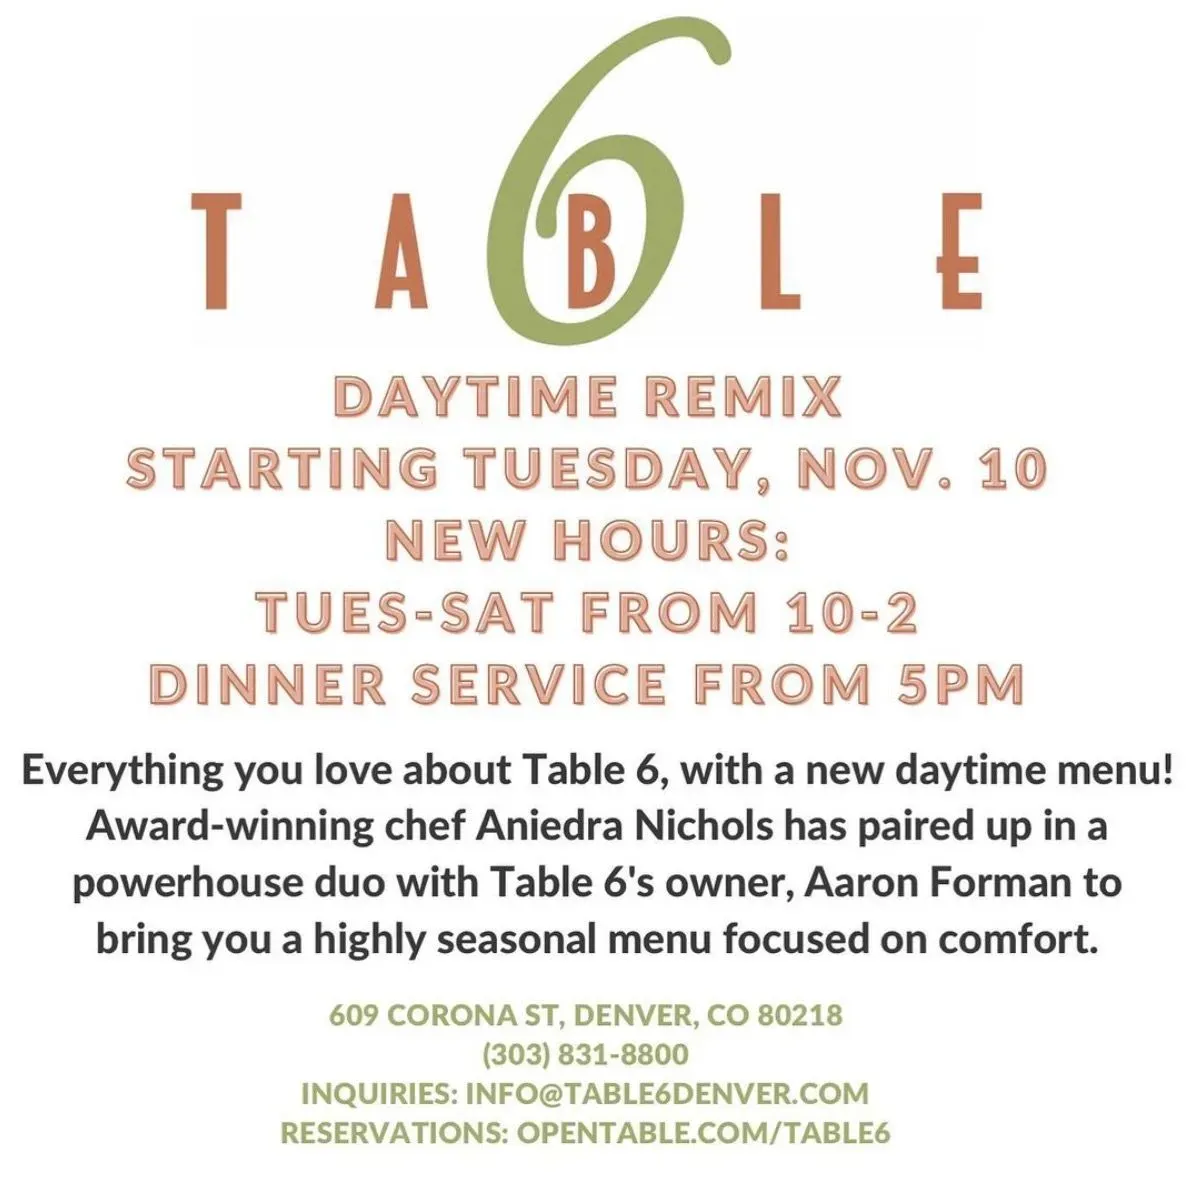 Table 6 Daytime Remix